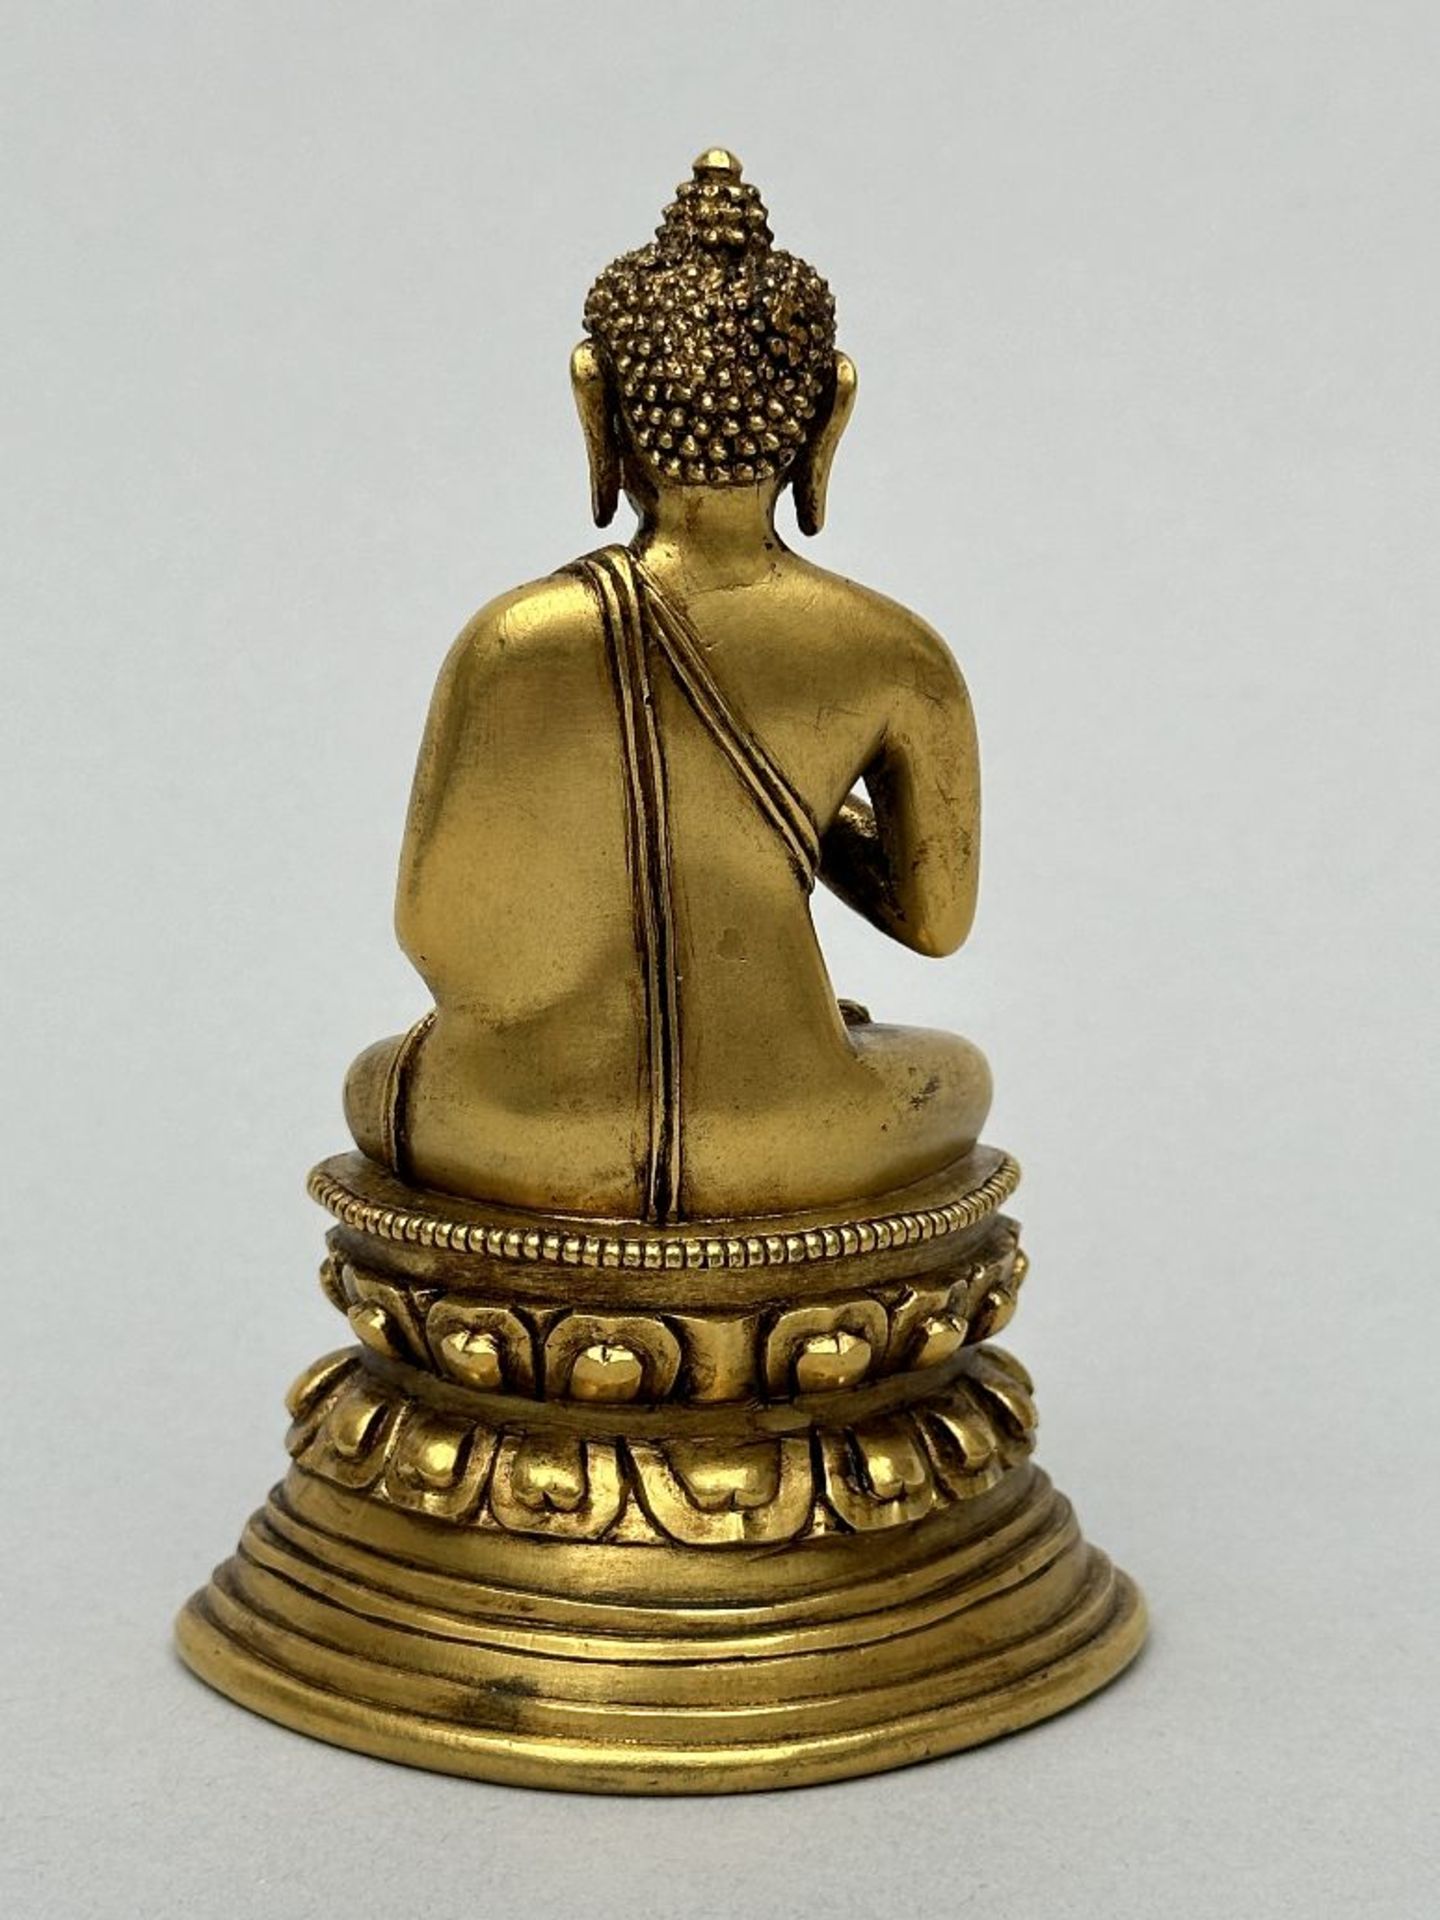 A bronze statue 'Buddha', China 18th century - Image 7 of 9